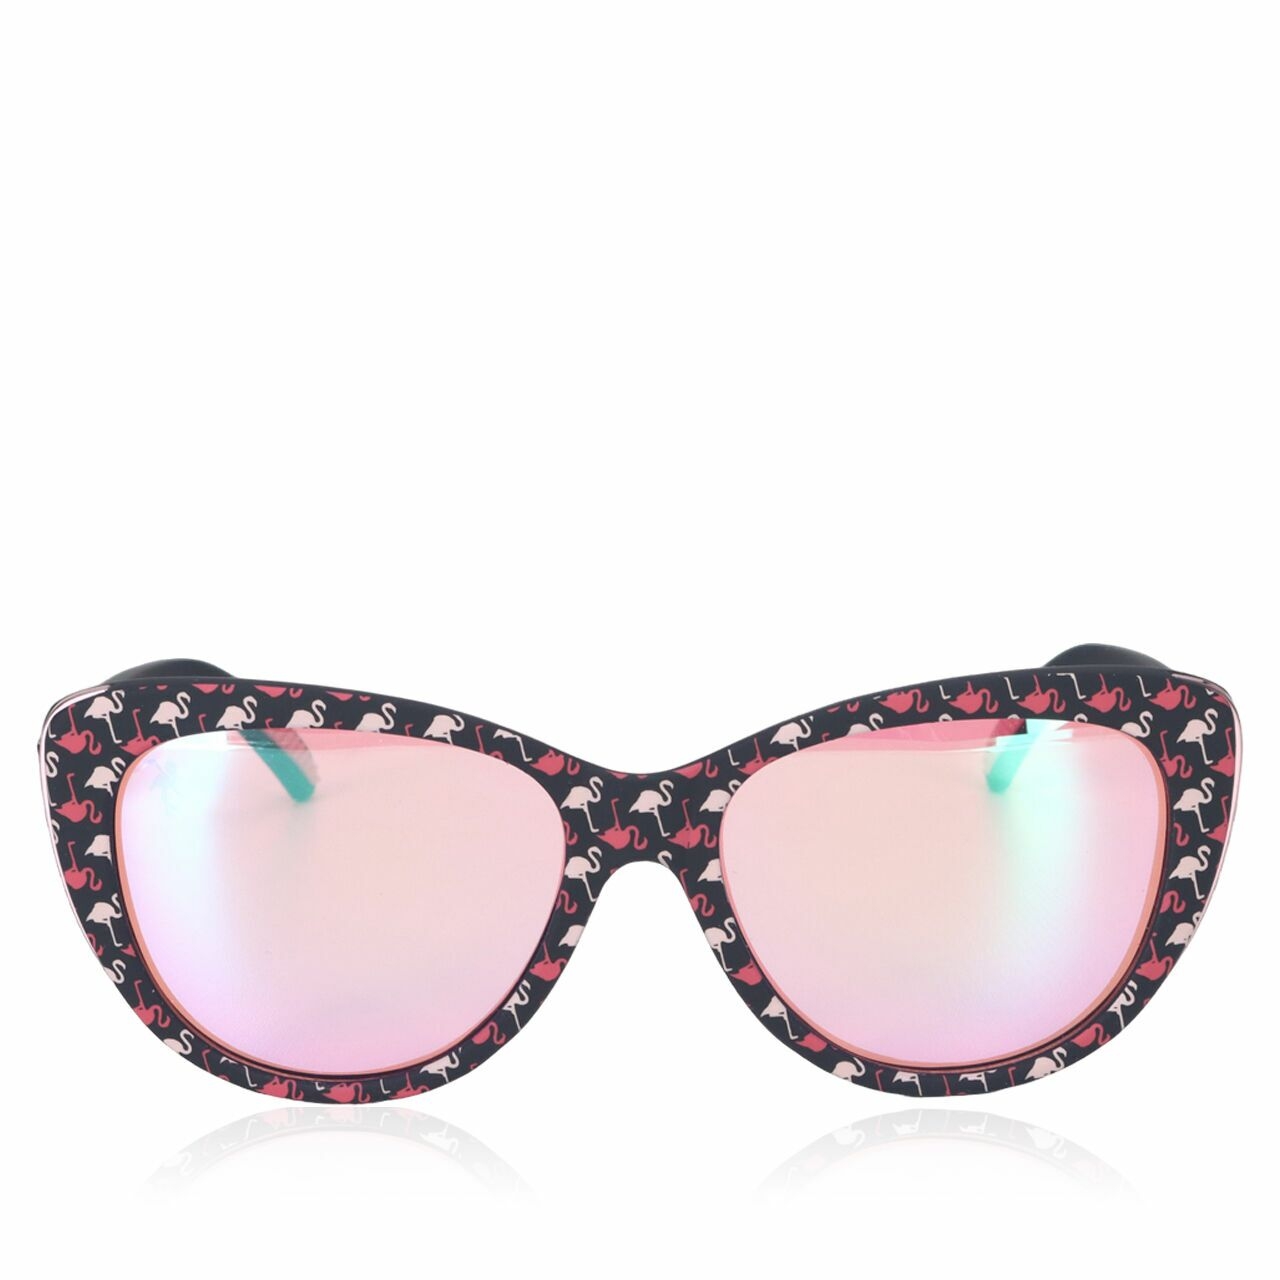 Goodr Gopher A Flamingo Black & Pink Sunglasses